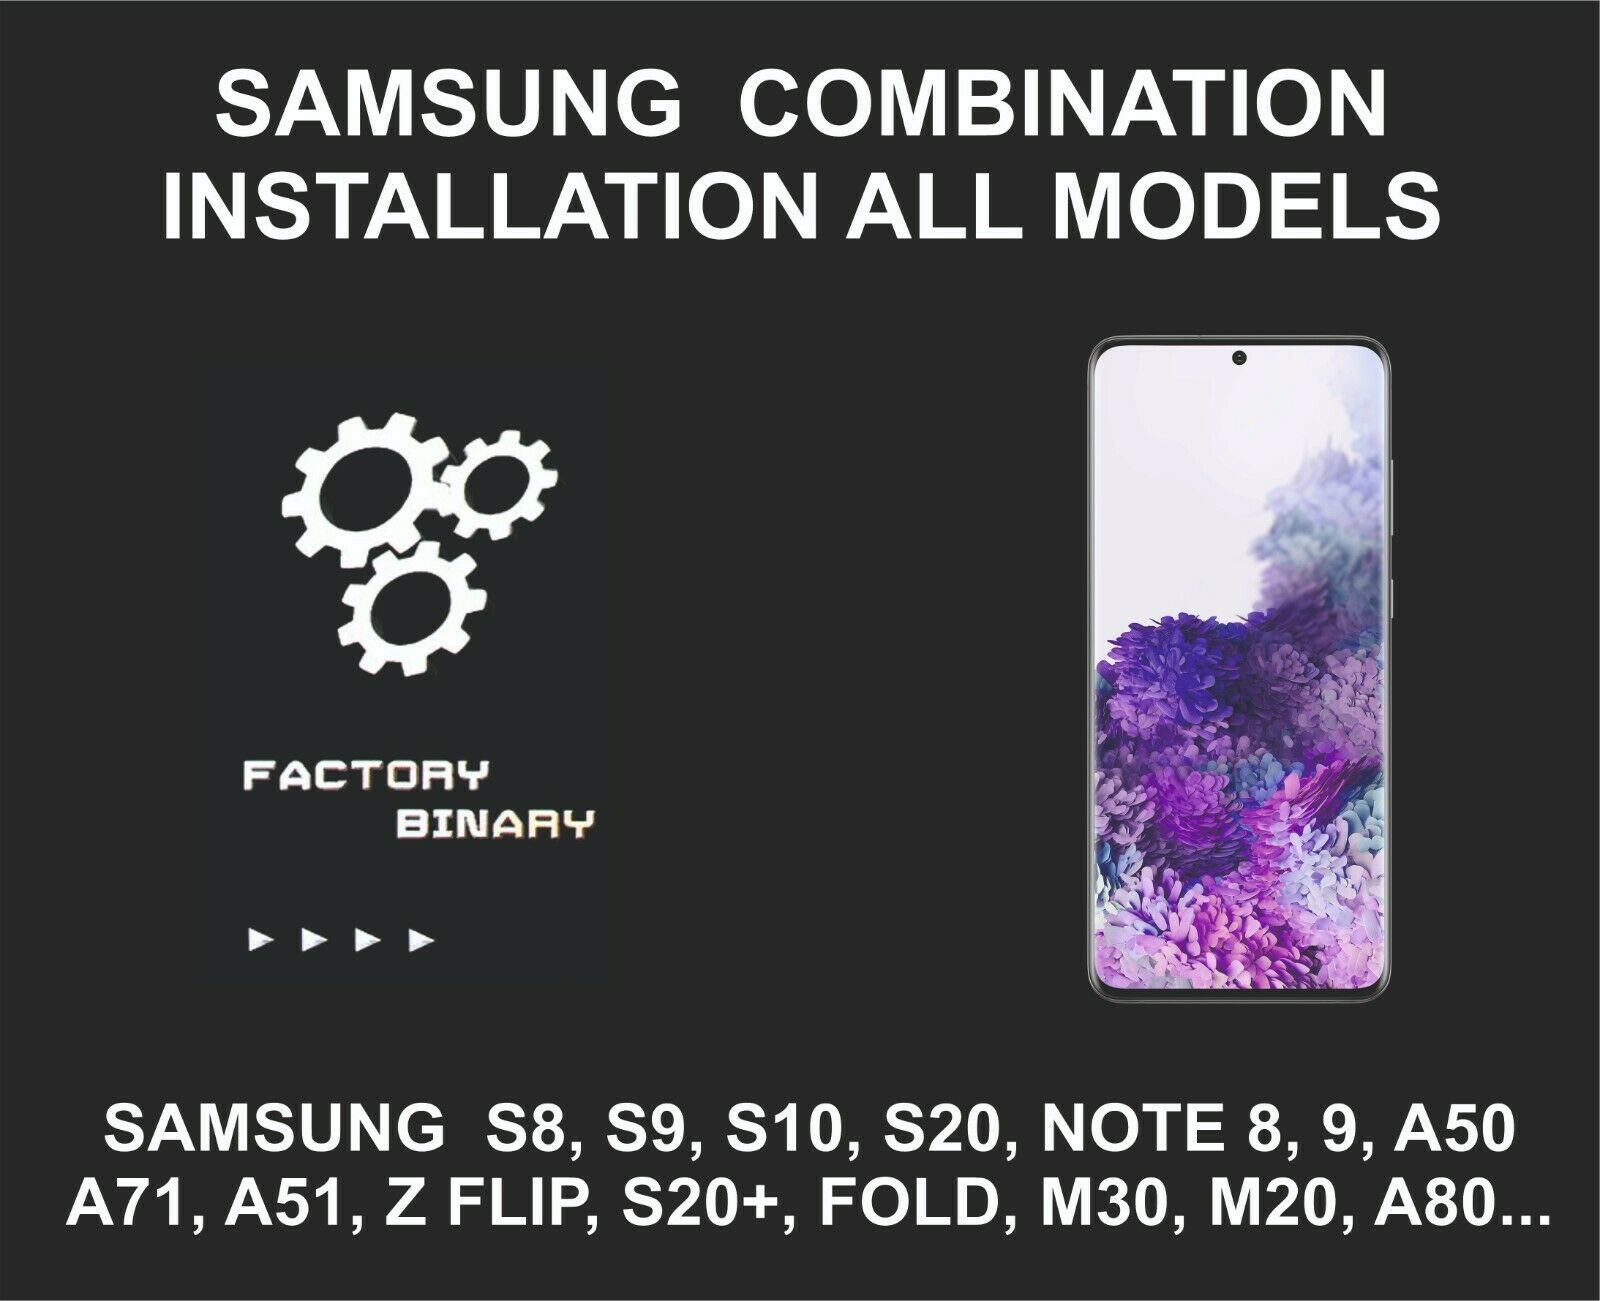 Samsung Combination Installation, All Samsung Models, S10, S20, Z Flip, Note 10